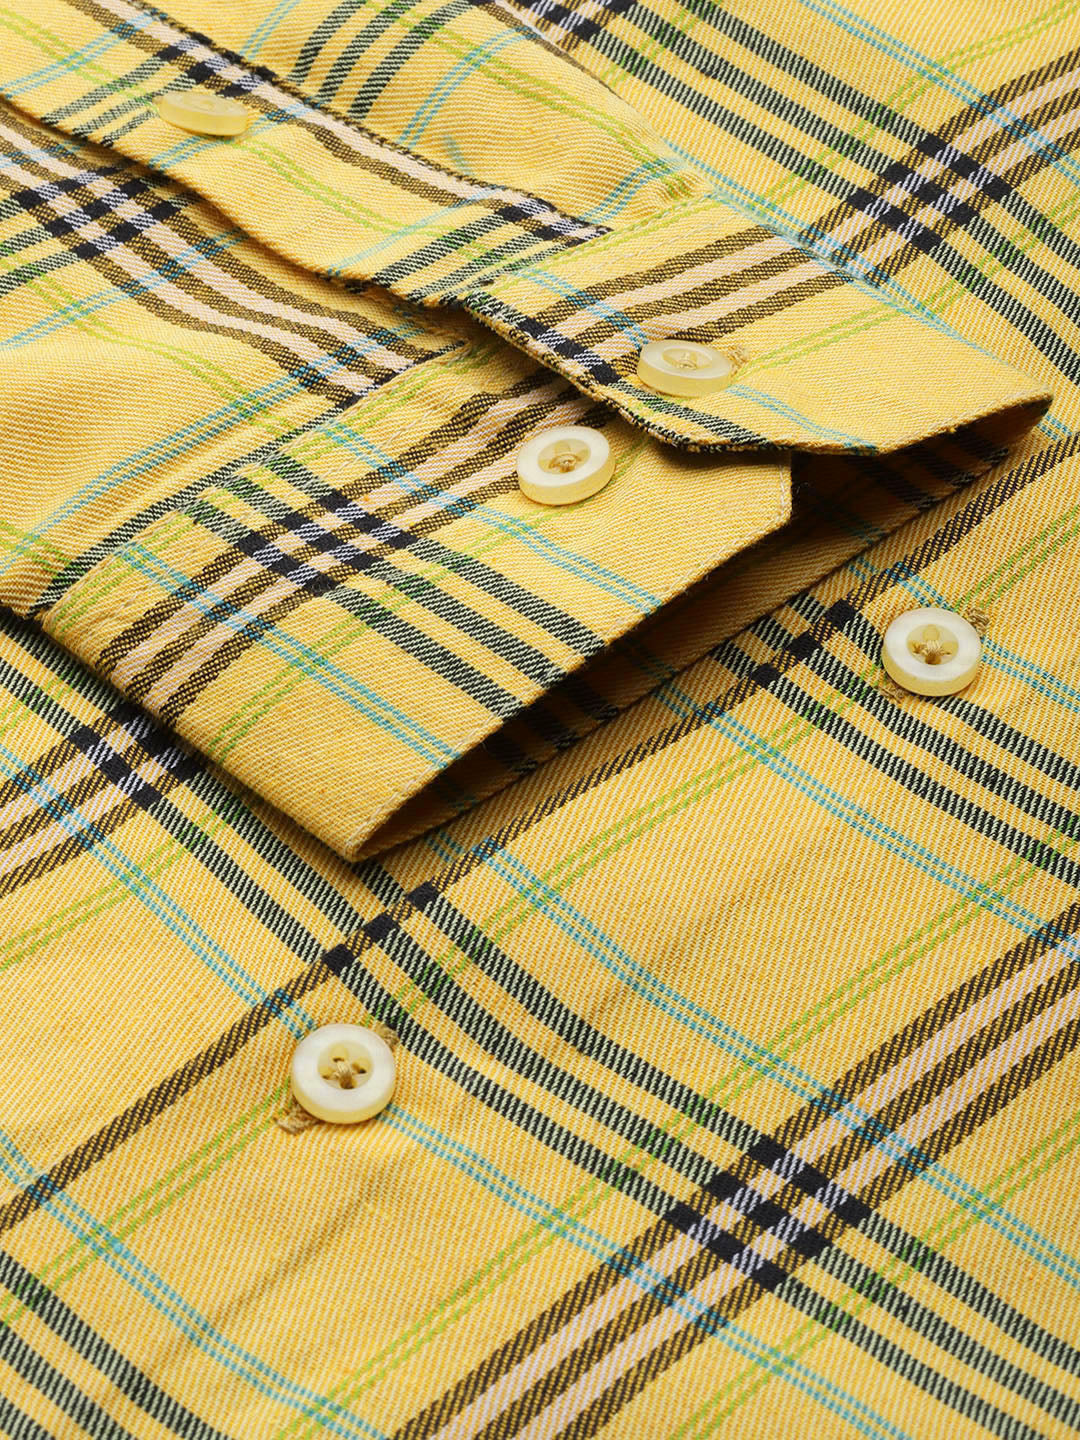 Men's Cotton Checked Formal Shirts ( SF 793Yellow ) - Jainish